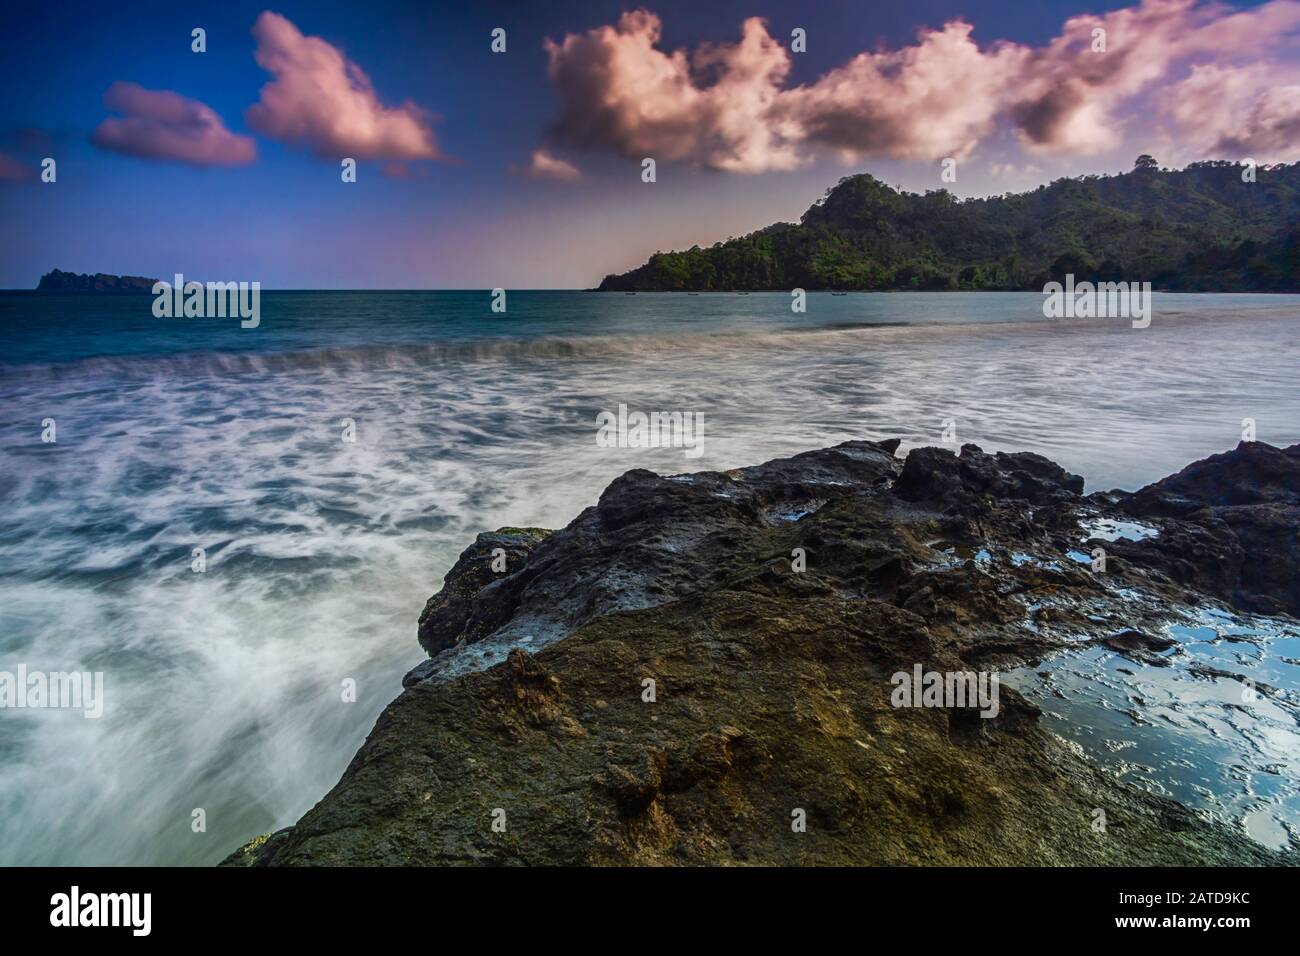 Bandialit Beach, Meru Betiri National Park, Jember, Indonesia Stock Photo